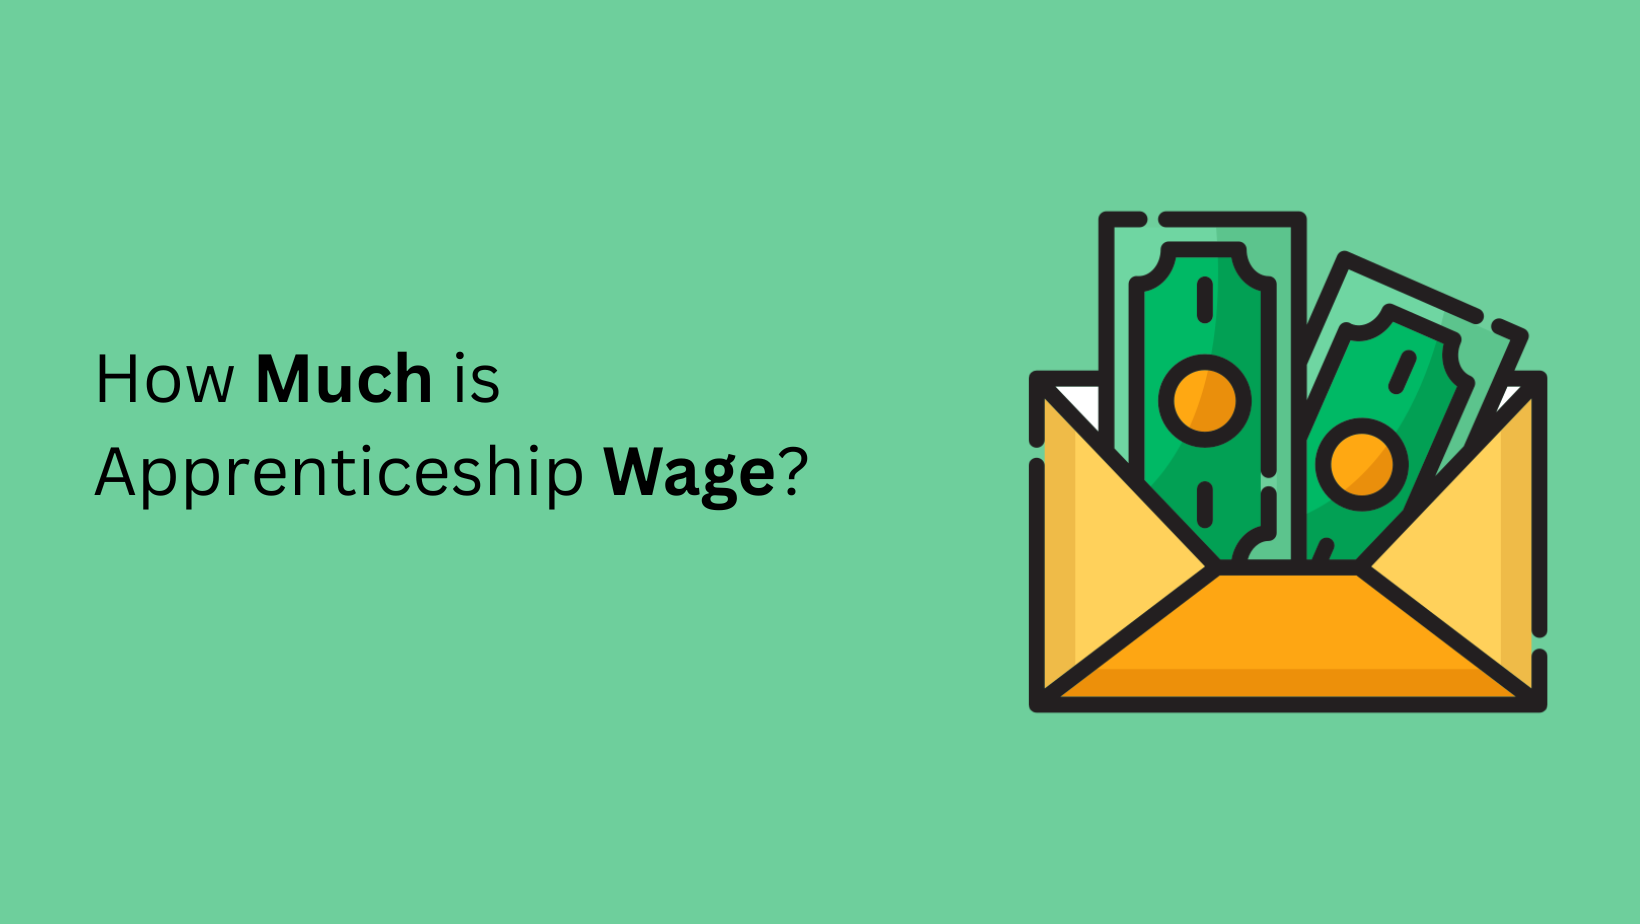 How Much is Apprenticeship Wage